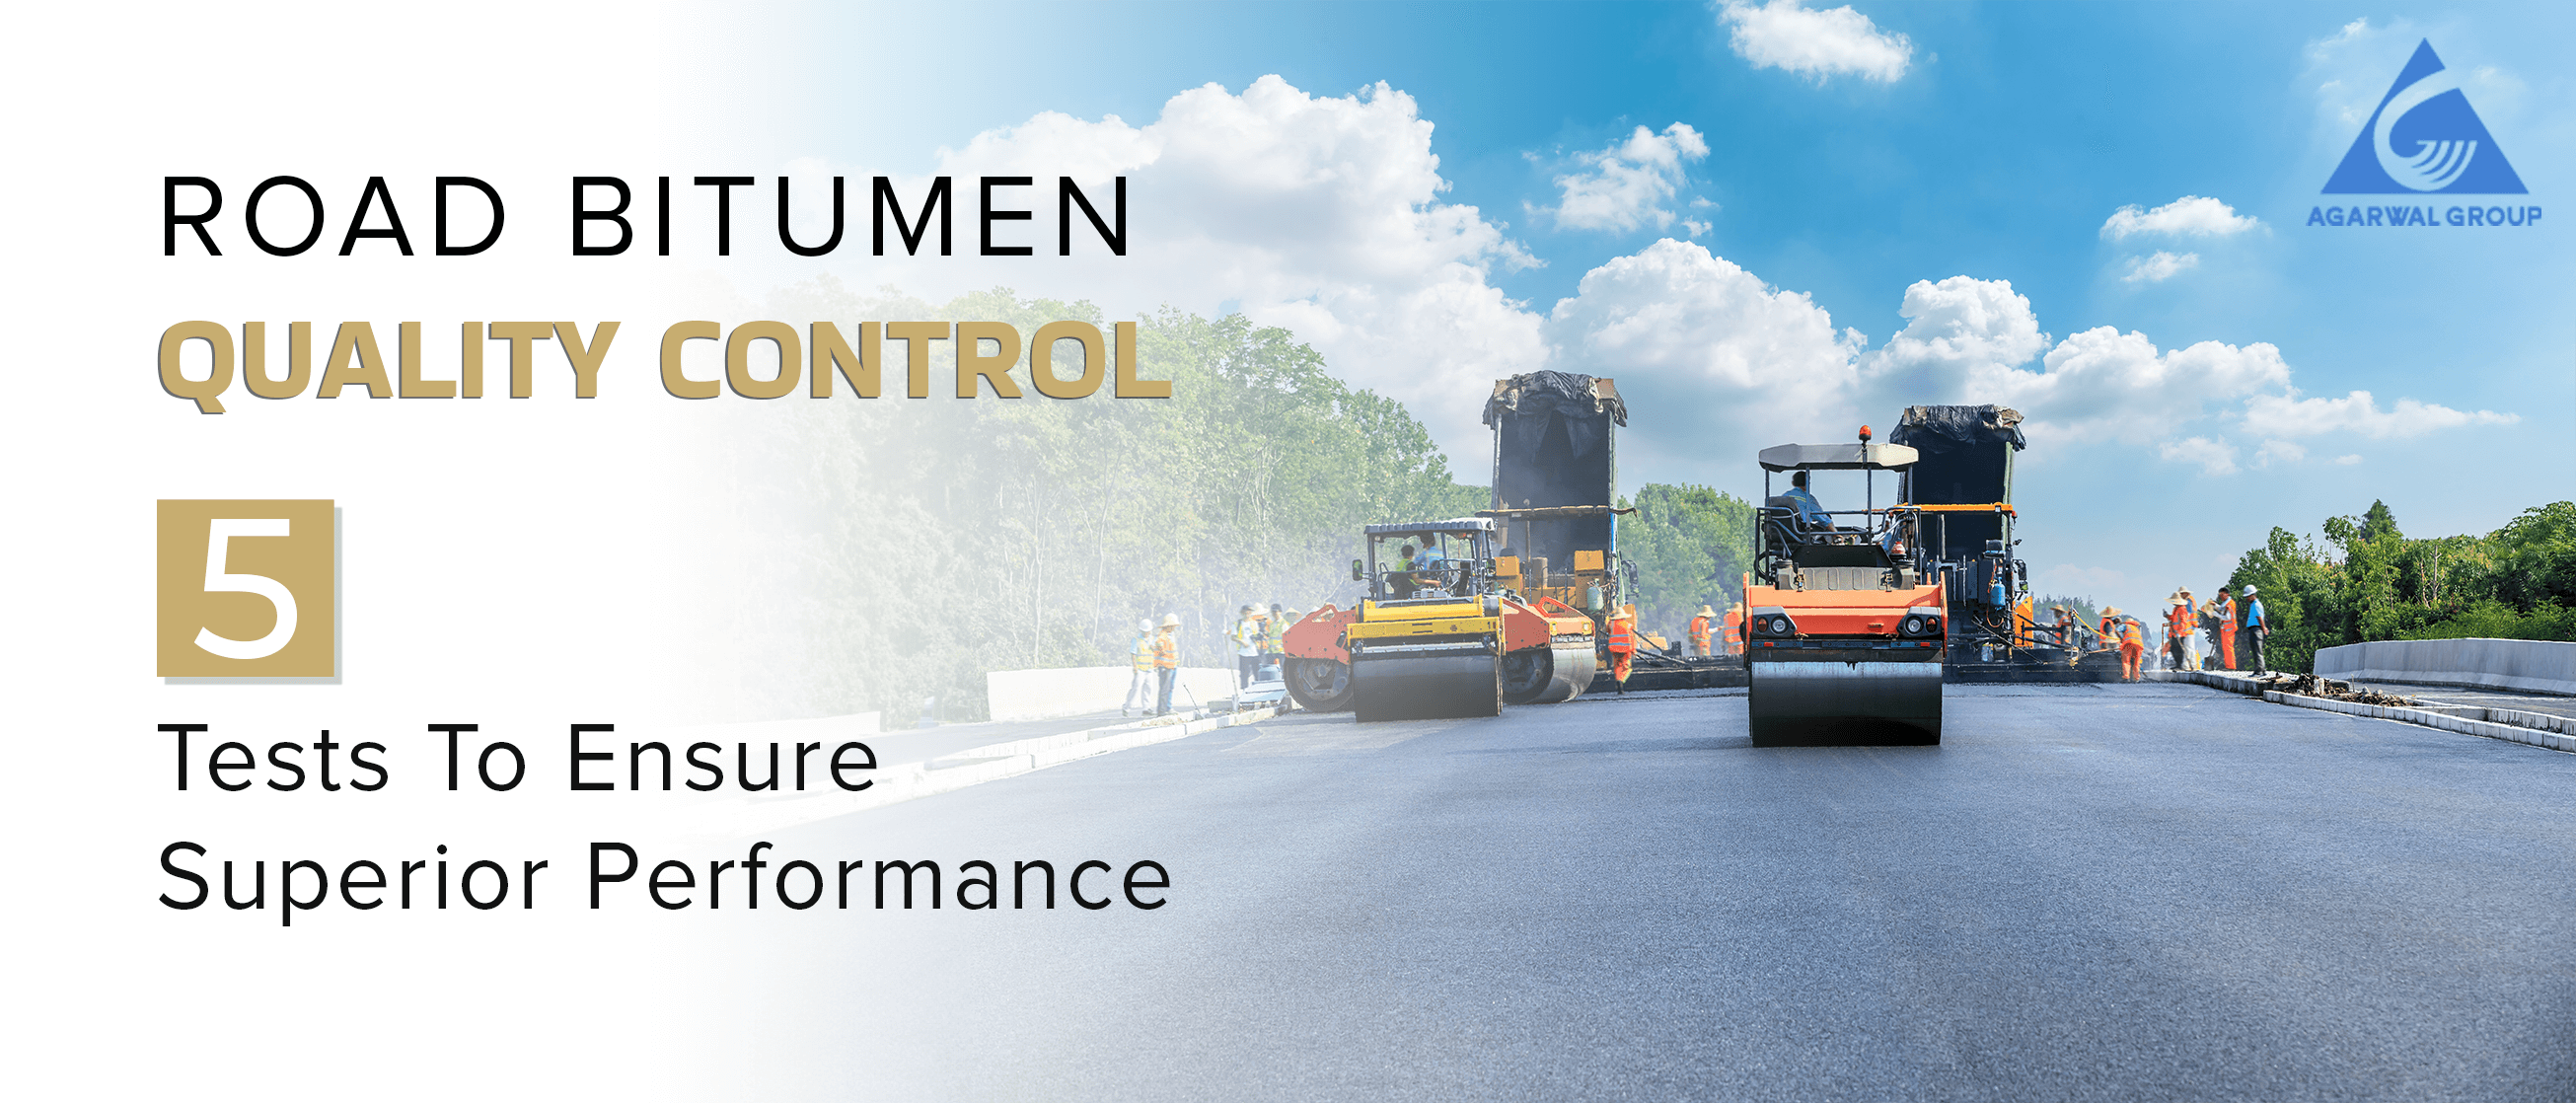 Road Bitumen Quality Control:  5 Tests To Ensure Superior Performance